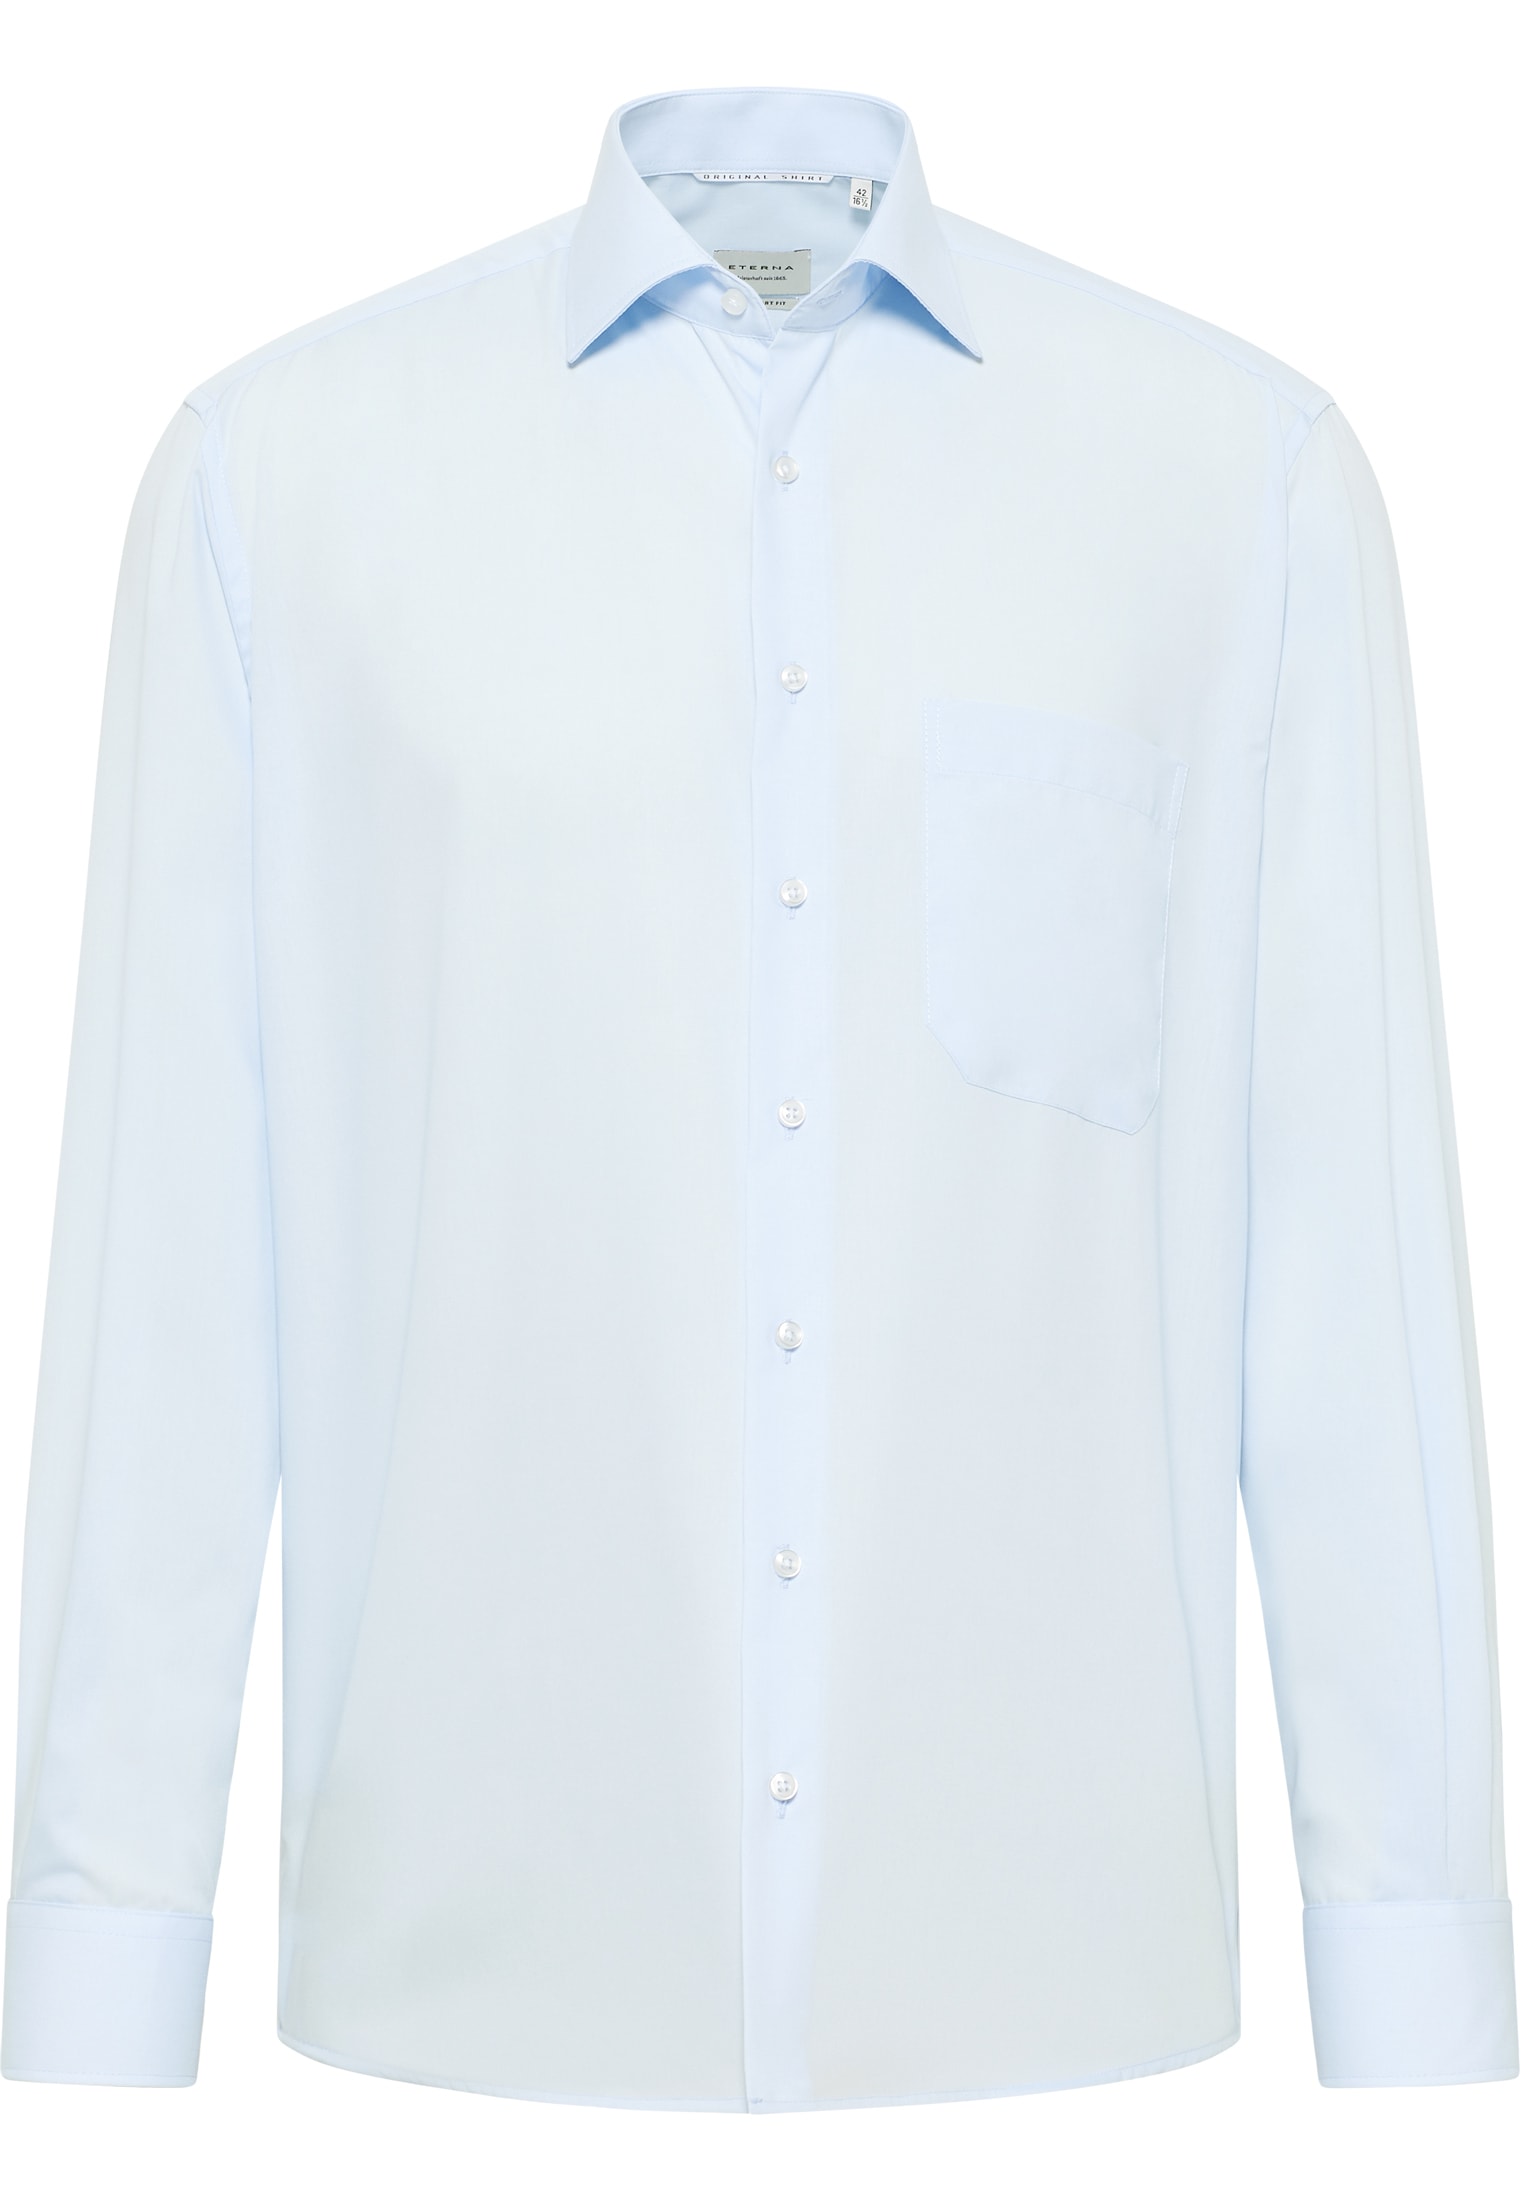 COMFORT FIT Original Shirt in light blue plain